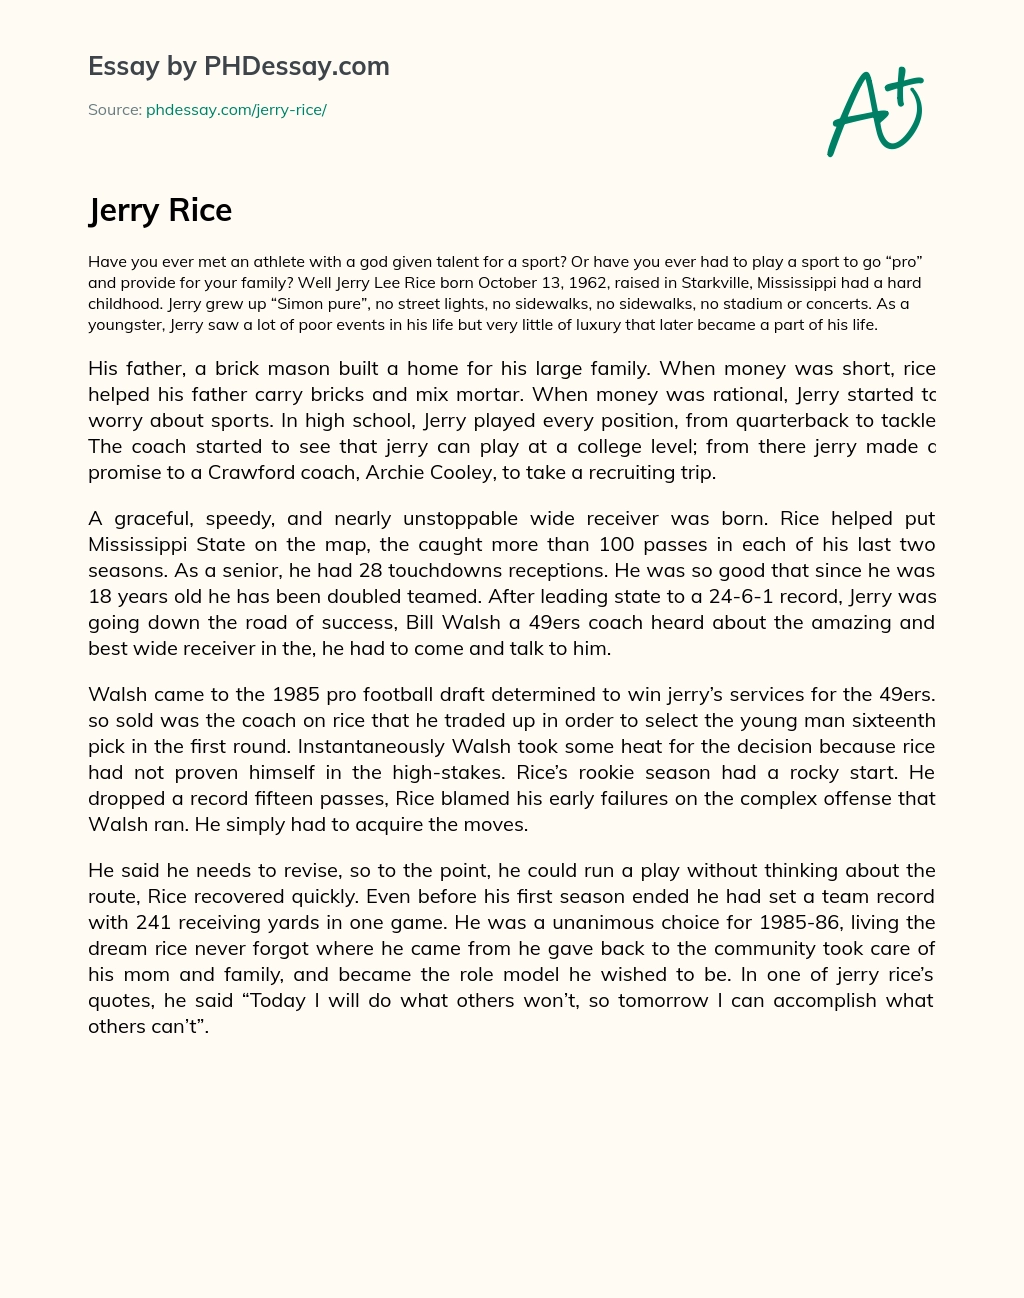 essay on jerry rice